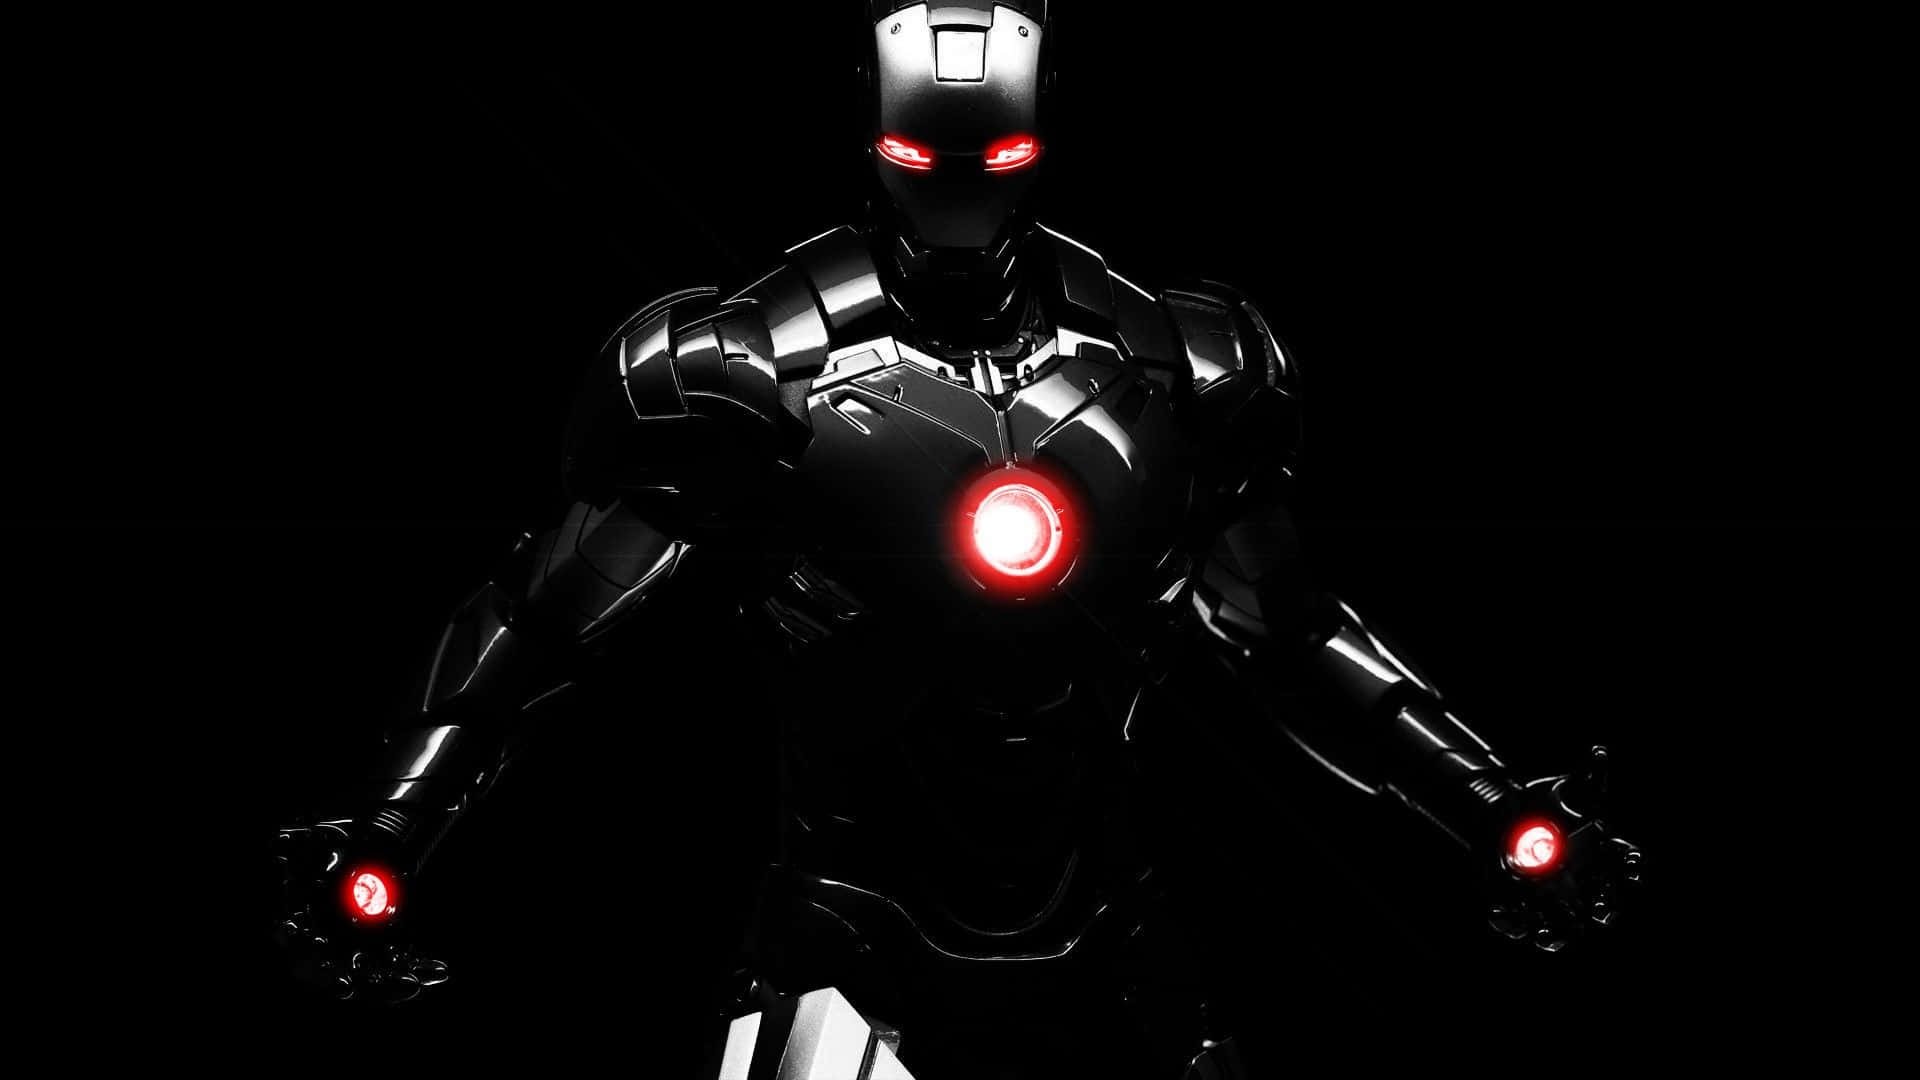 Free Iron Man Black And White Wallpaper Downloads, [100+] Iron Man Black  And White Wallpapers for FREE 